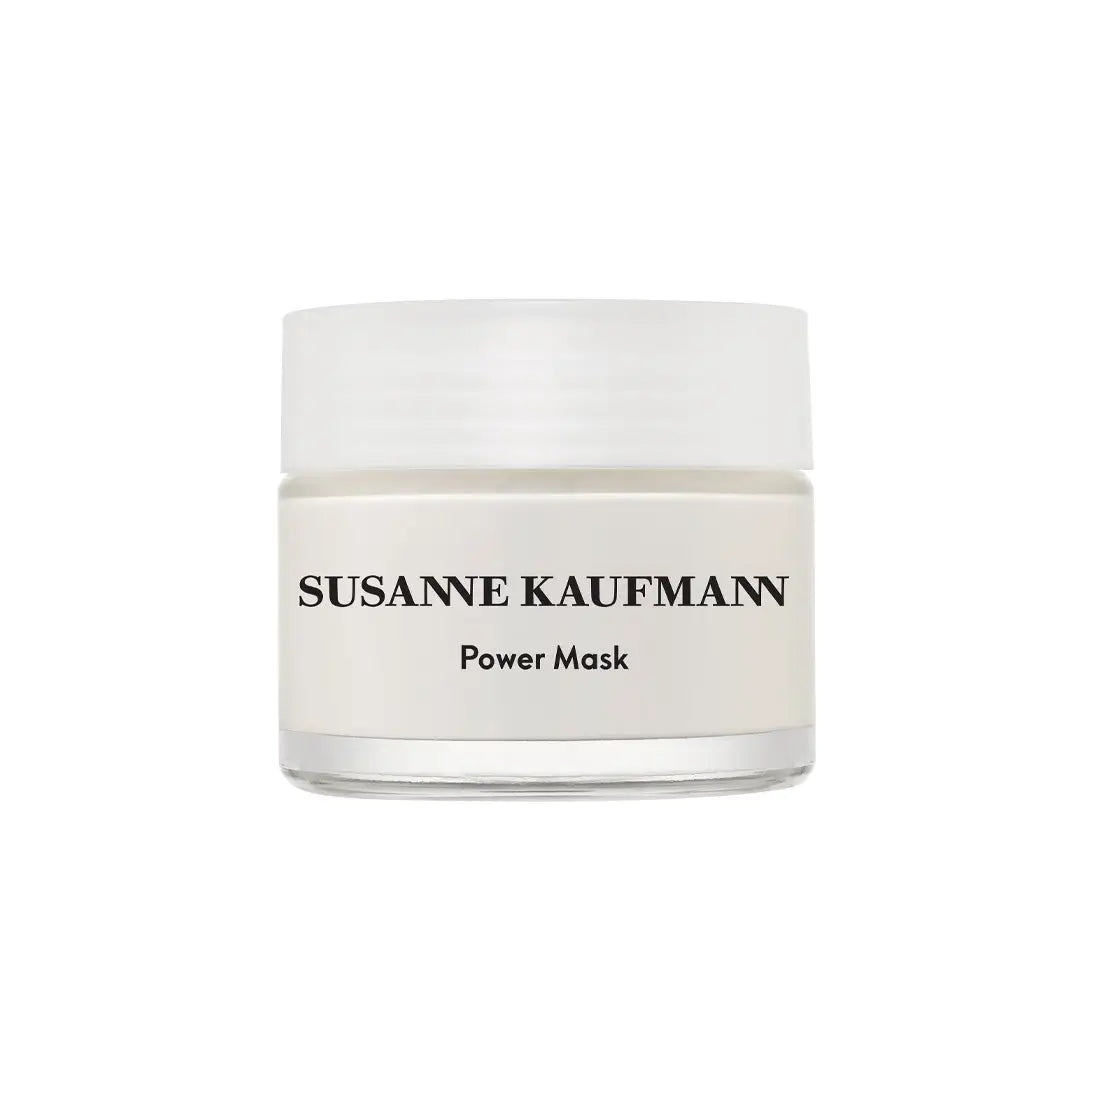 Susanne Kaufmann Power Mask 50ml - Free Shipping Worldwide